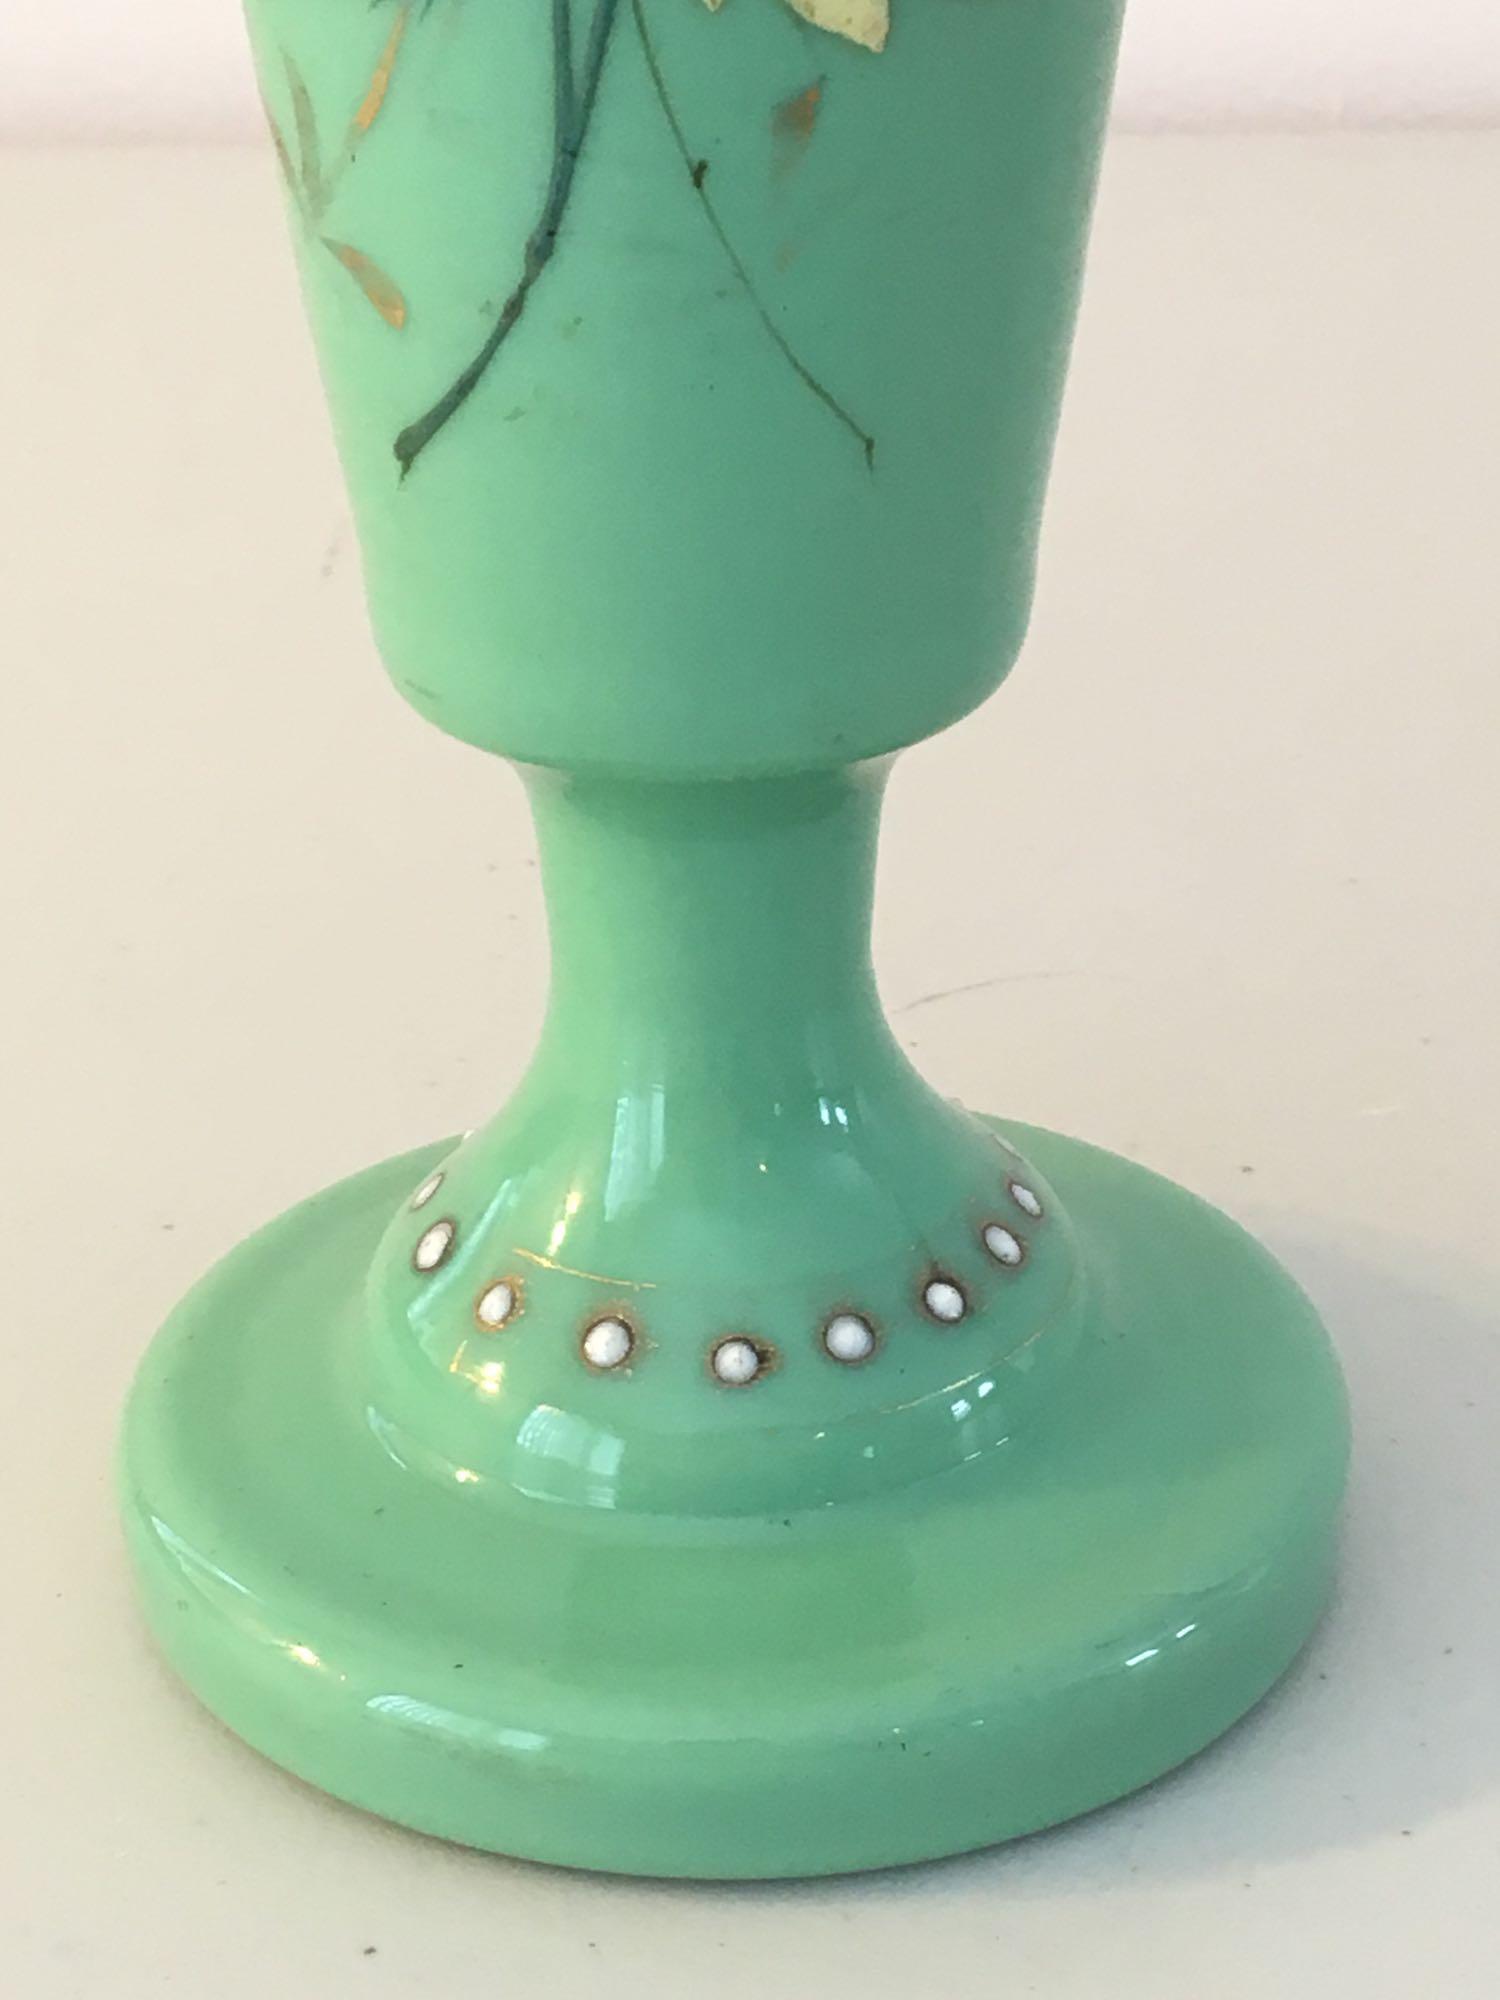 Antique hand-painted green floral design vase